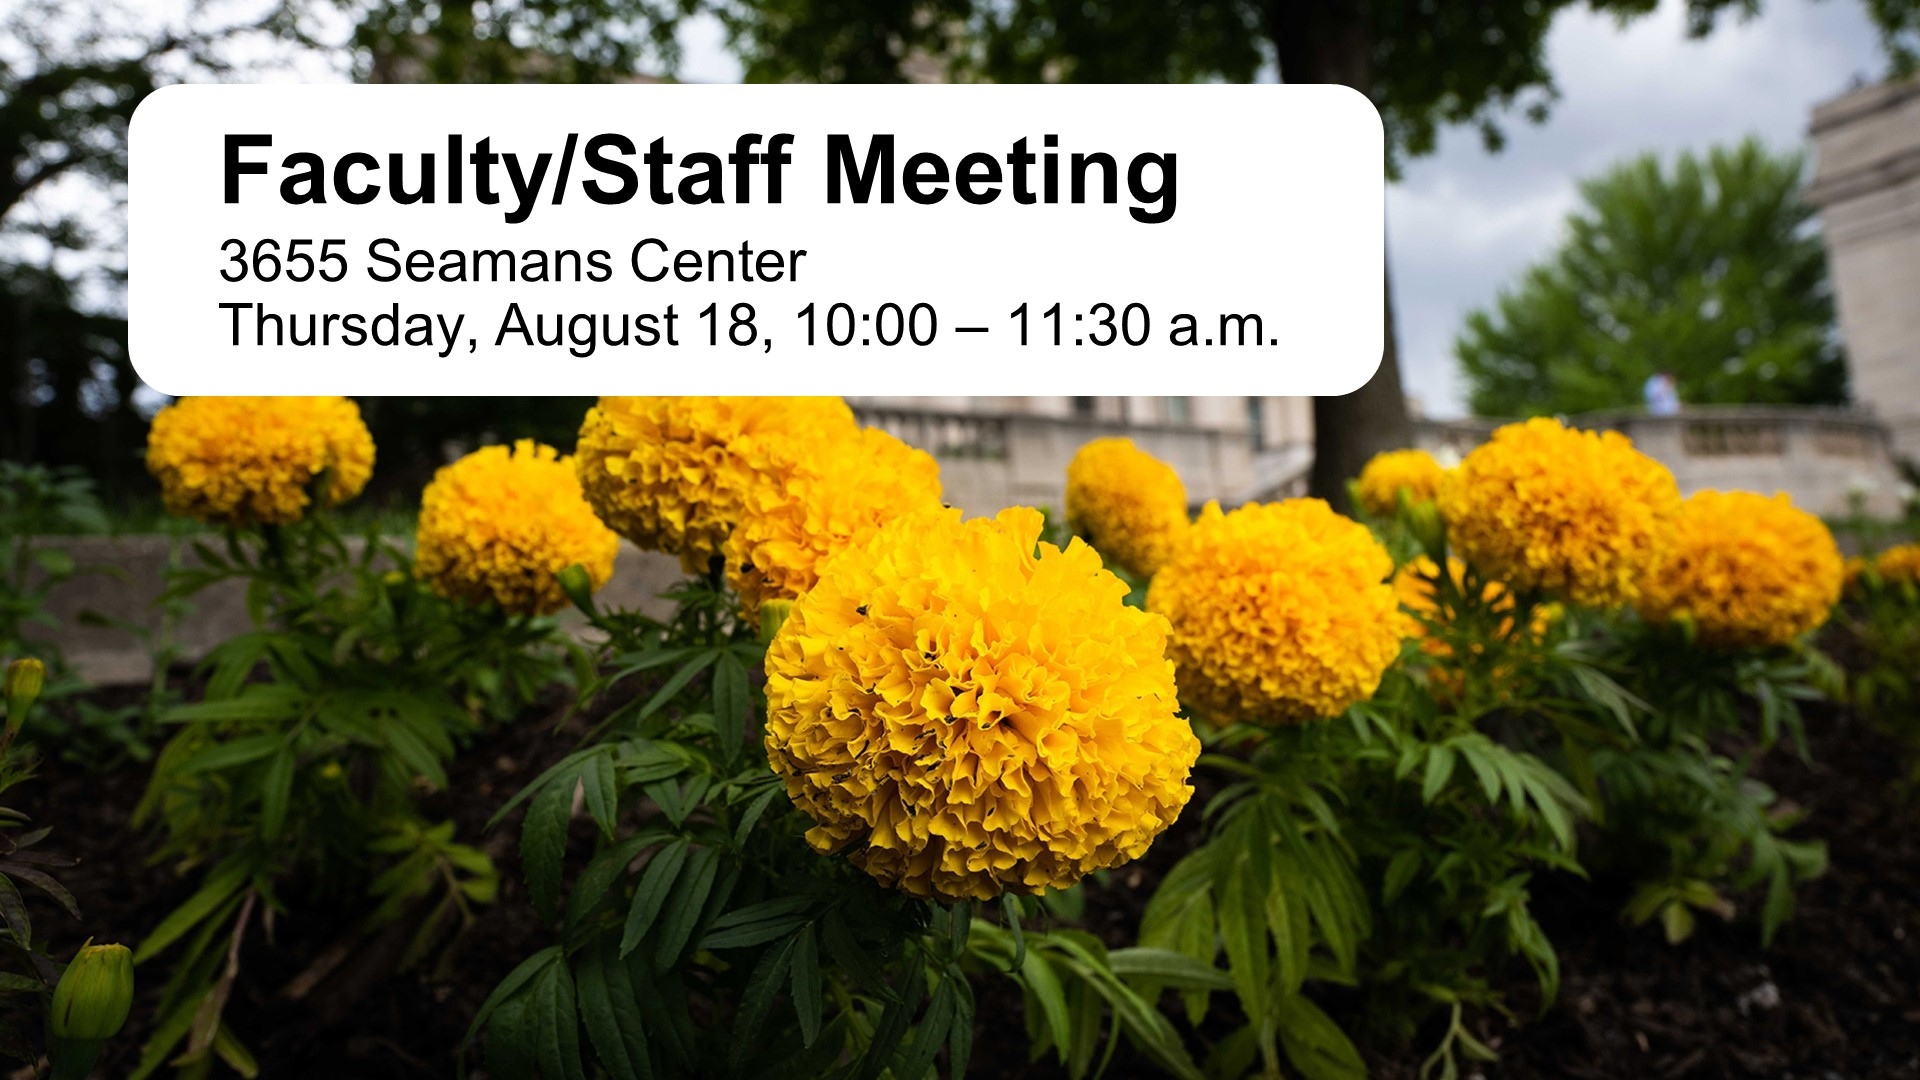 Faculty/Staff Meeting. 3655 Seamans Center, 08.18, 10-11:30a